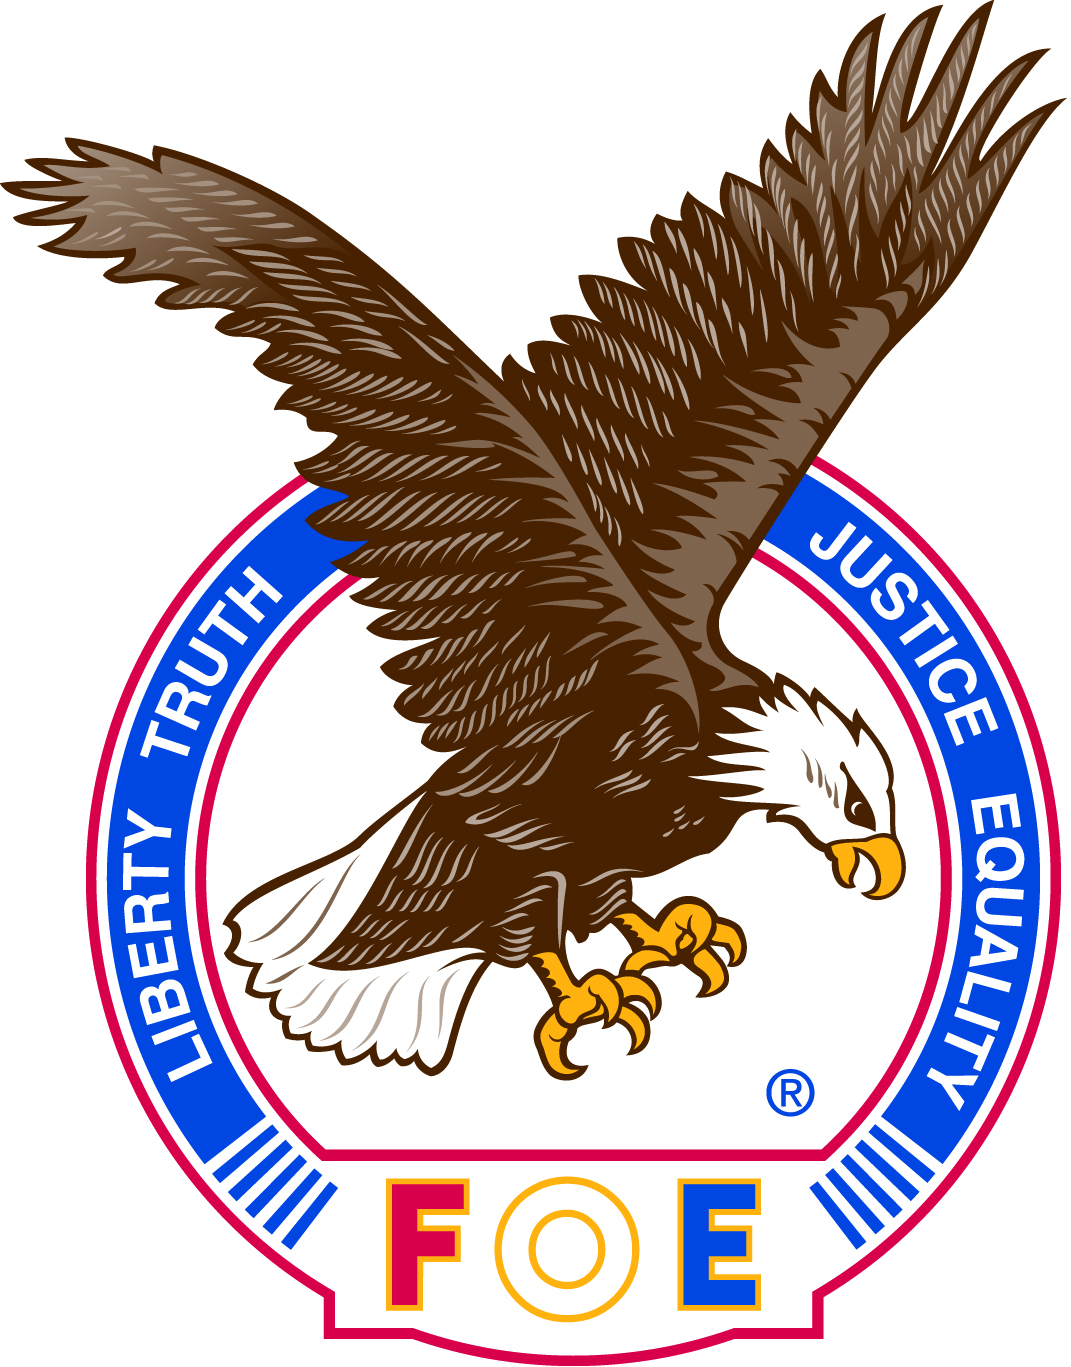 Eagles Club Aerie logo.